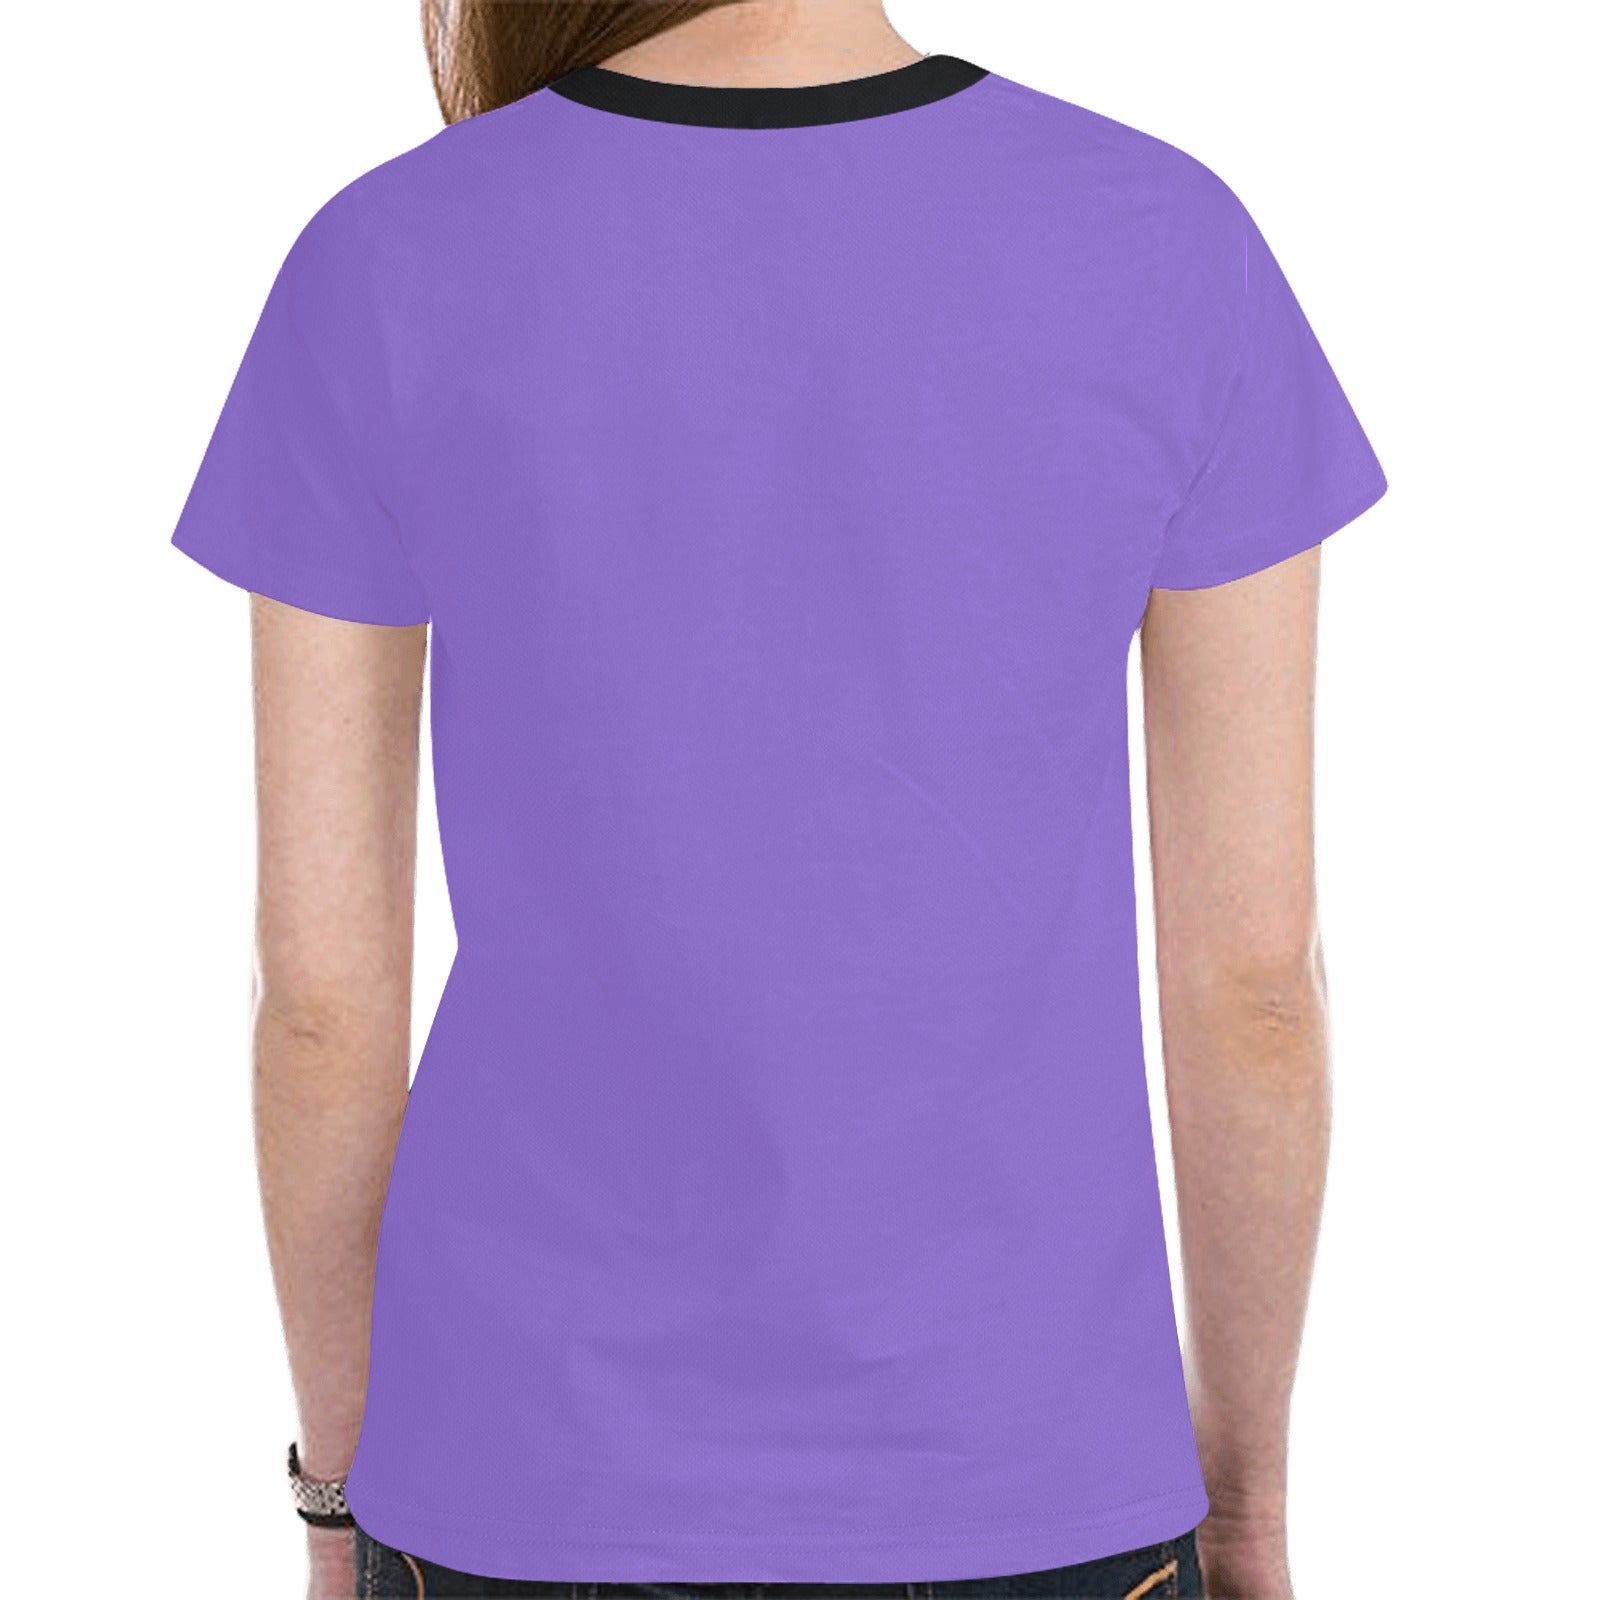 Bear Spirit Guide (Purple) T-shirt for Women